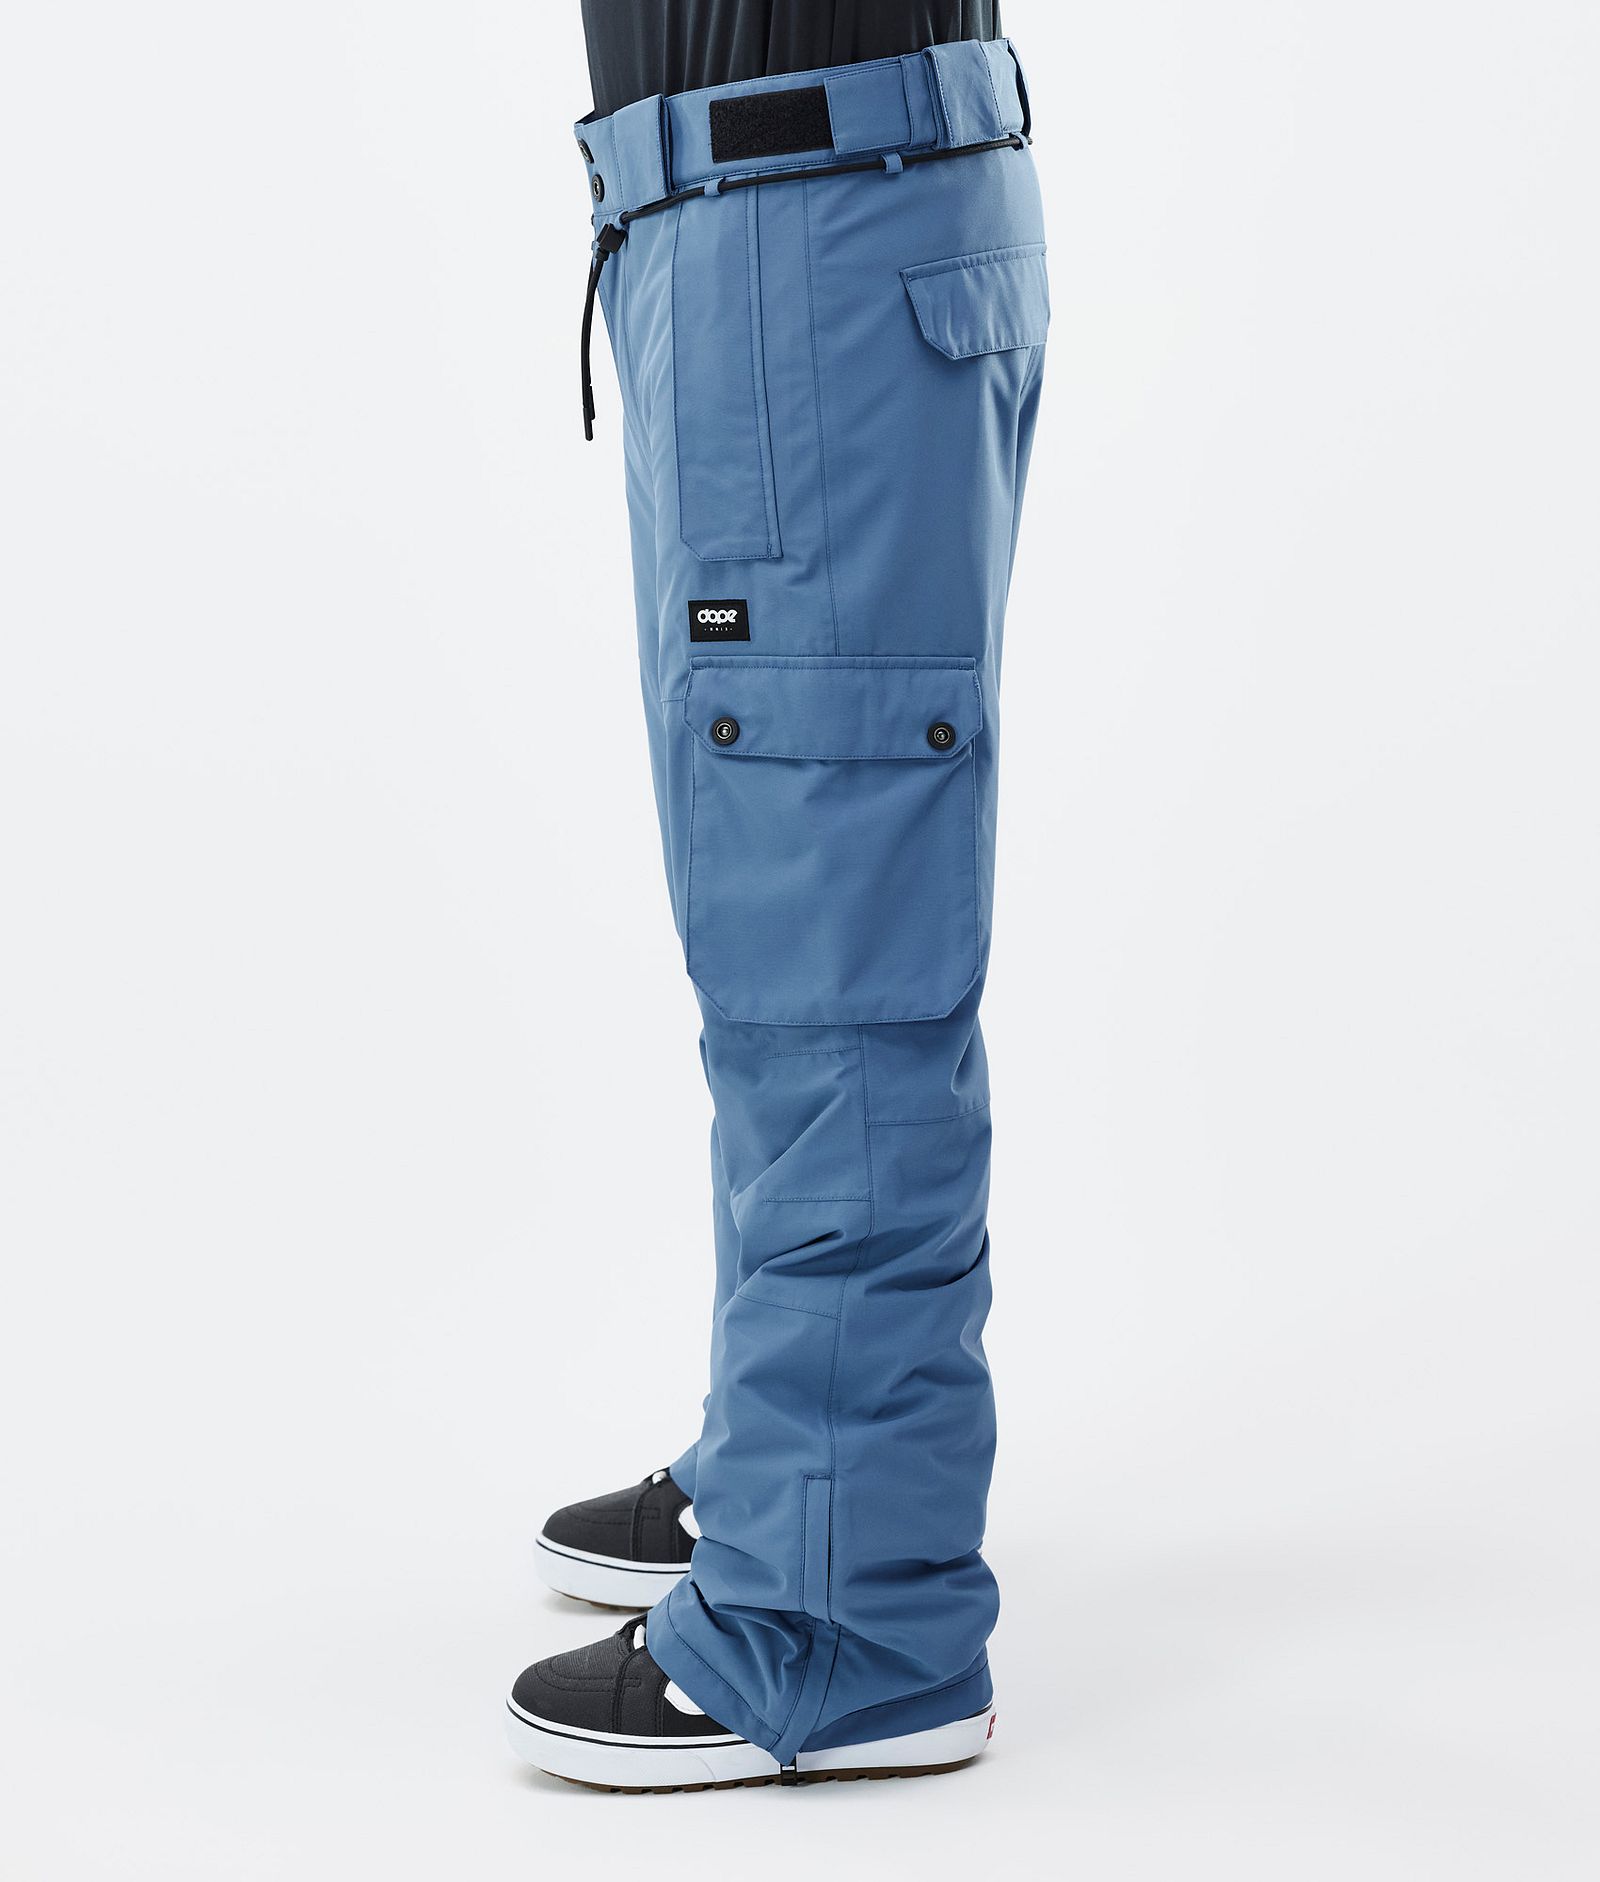 Dope Iconic Pantalon de Snowboard Homme Blue Steel